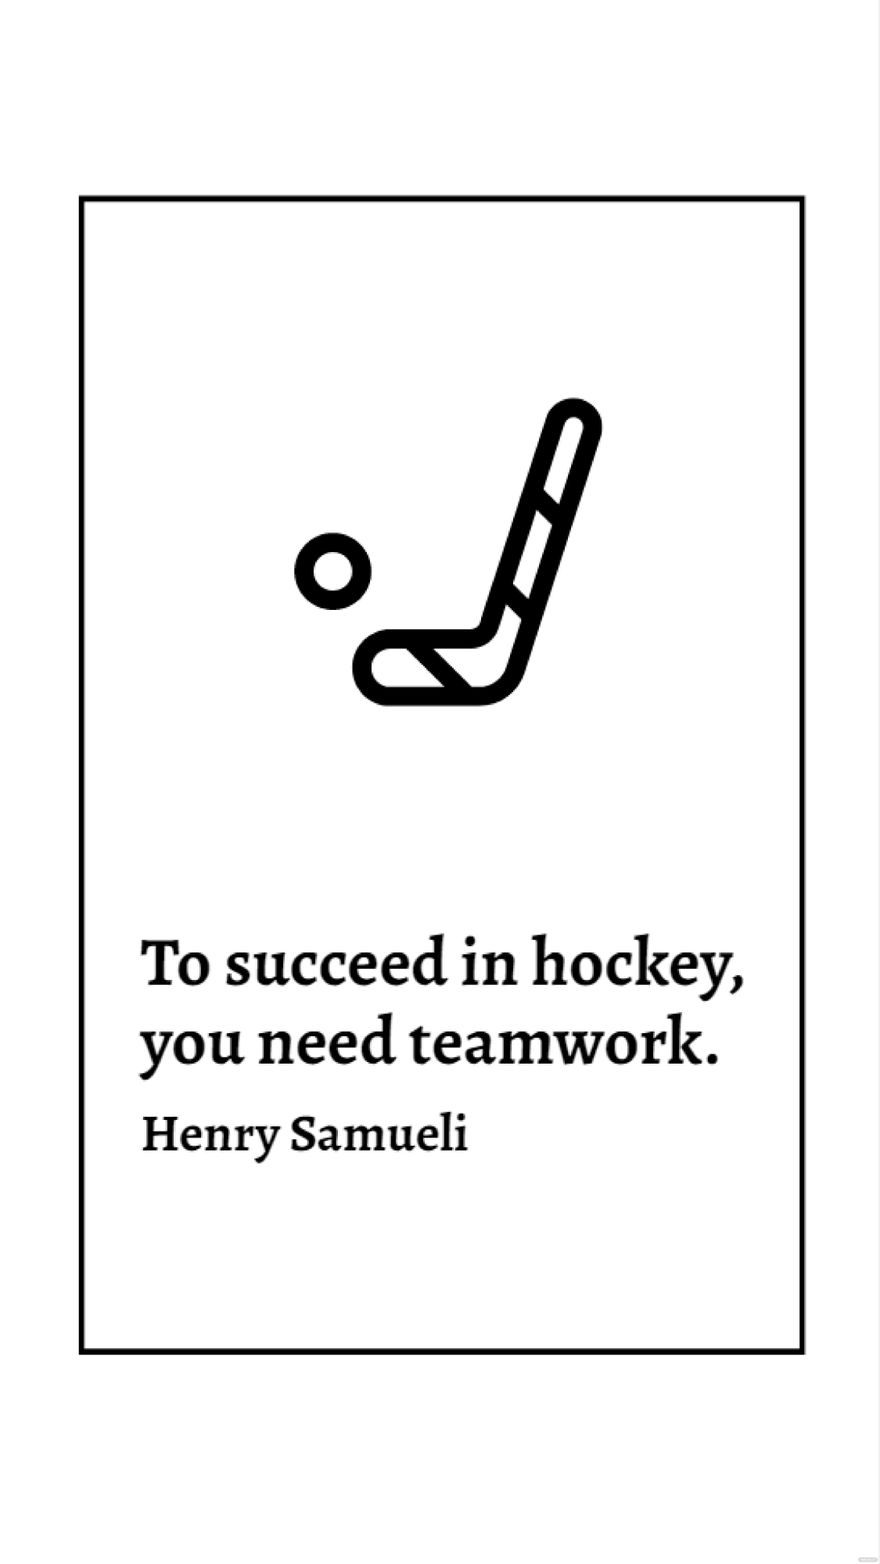 Henry Samueli - To succeed in hockey, you need teamwork.